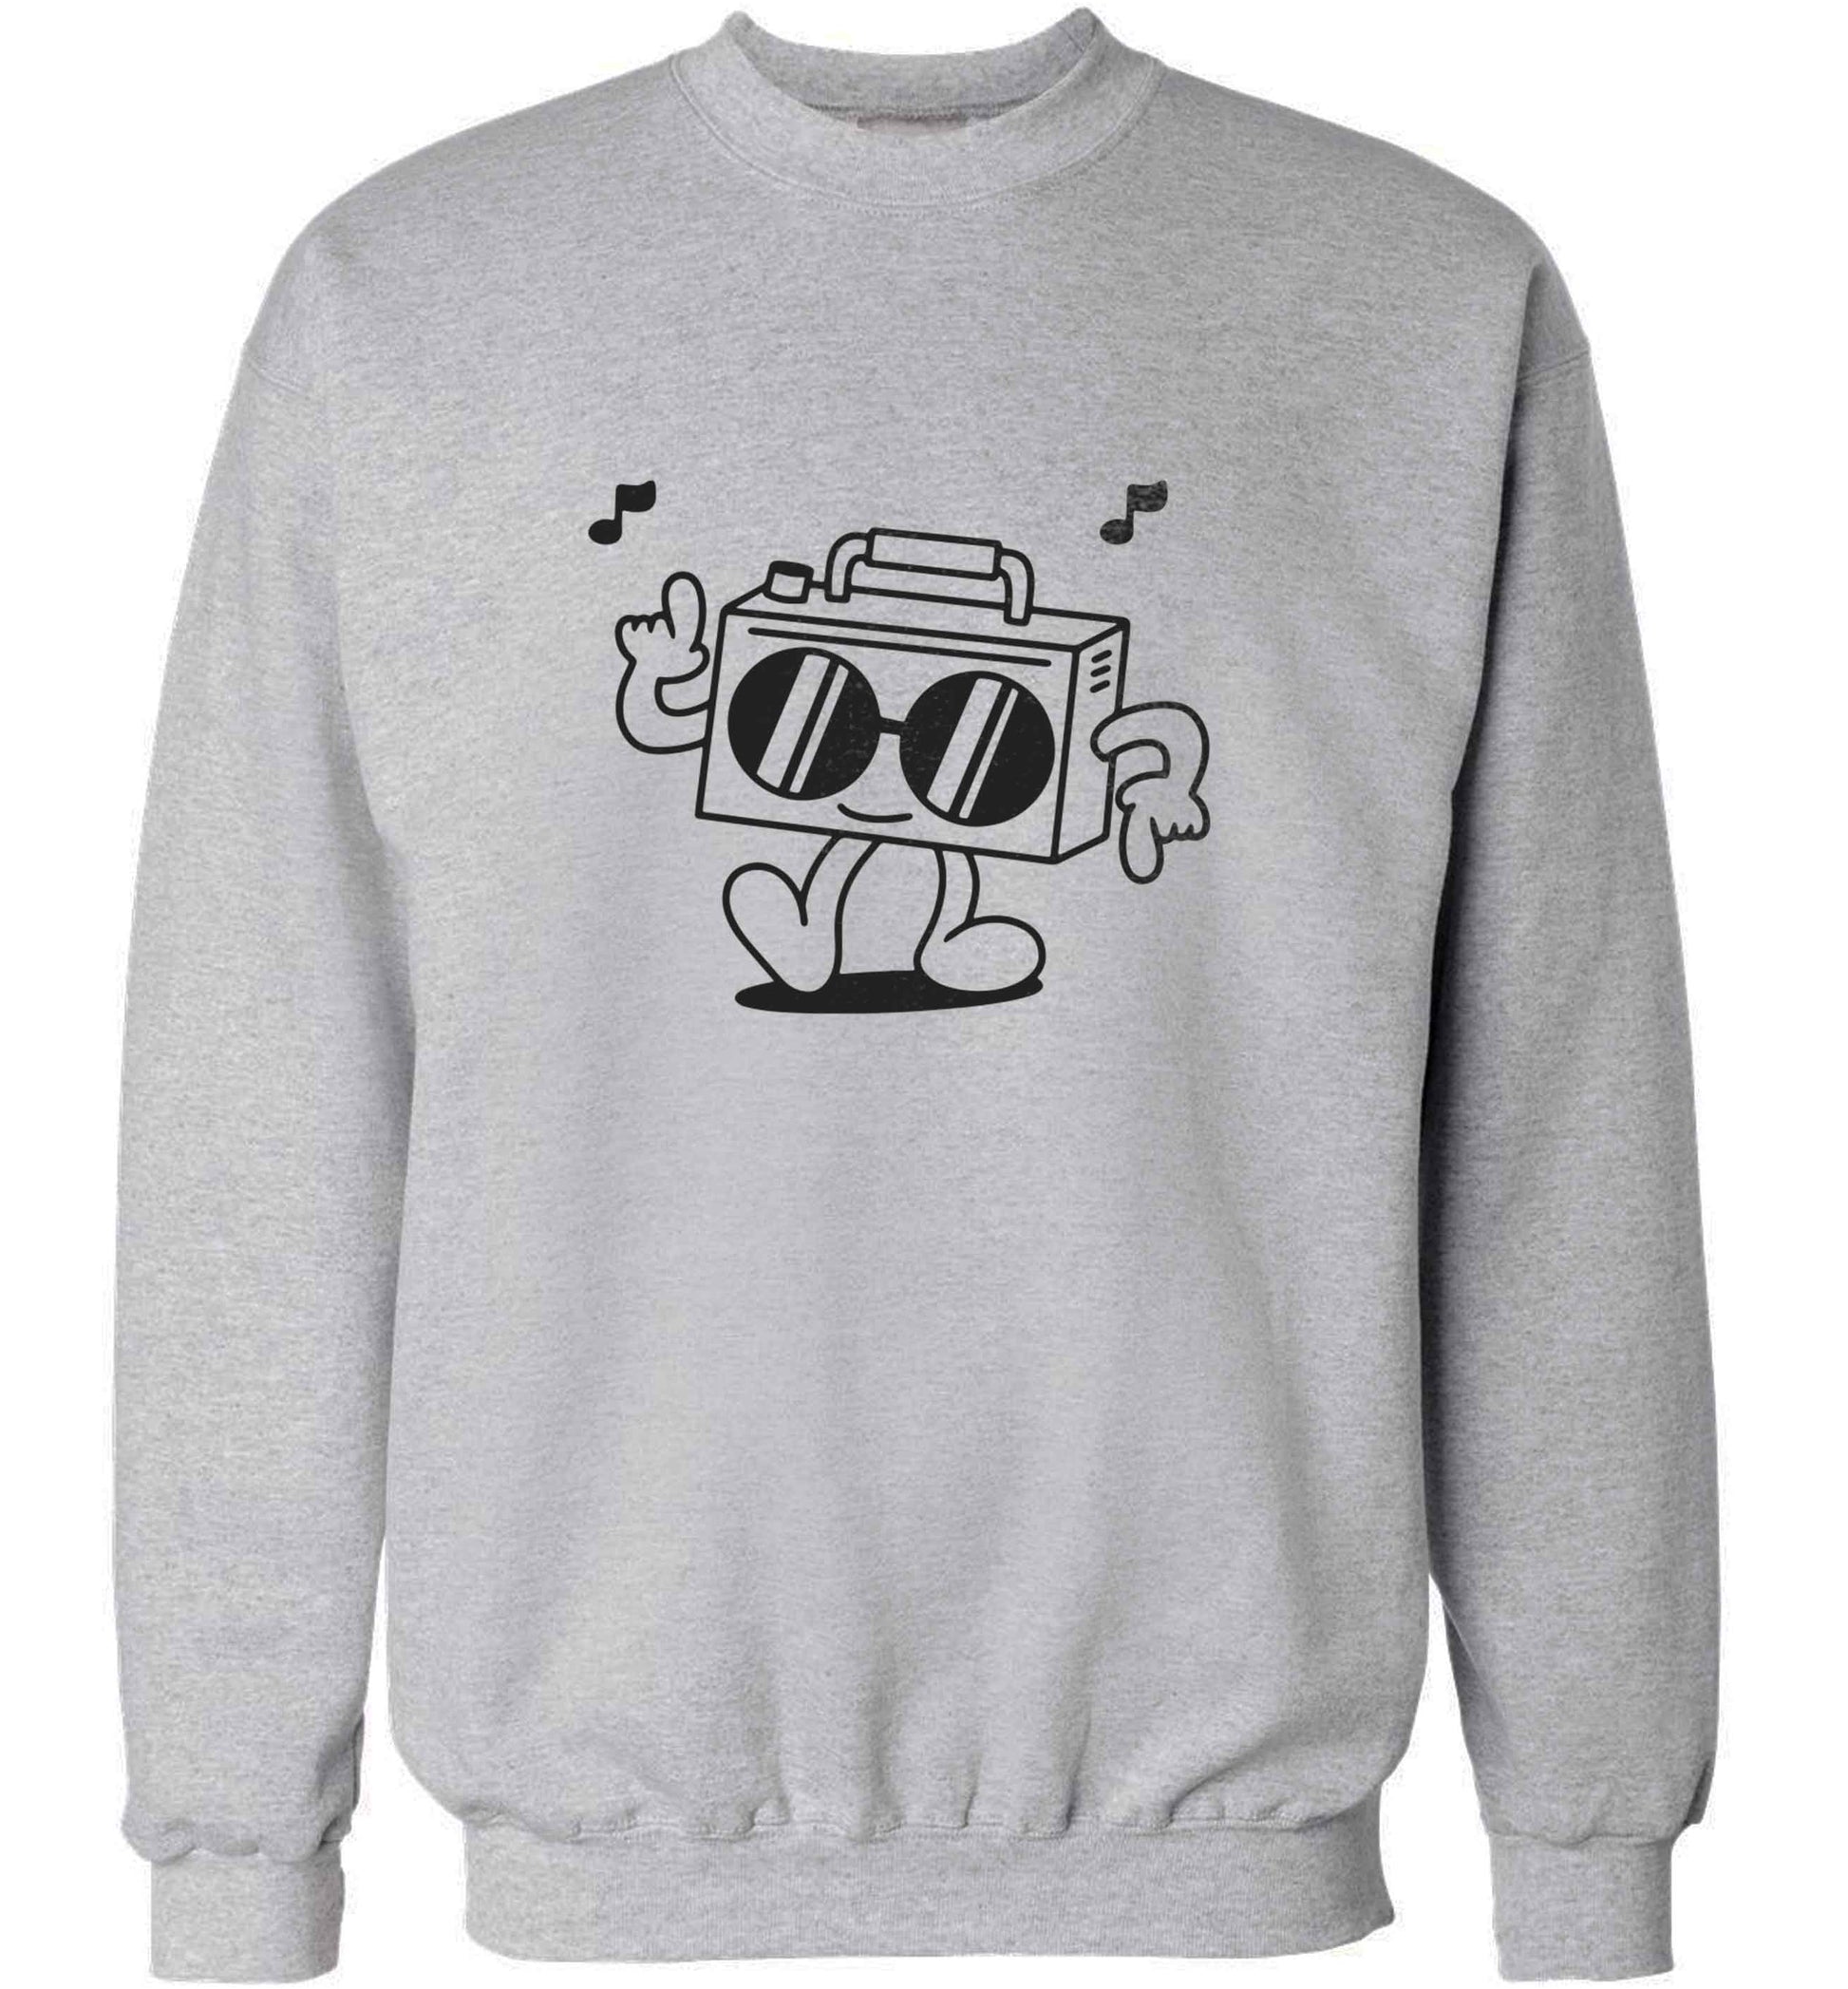 Boombox adult's unisex grey sweater 2XL